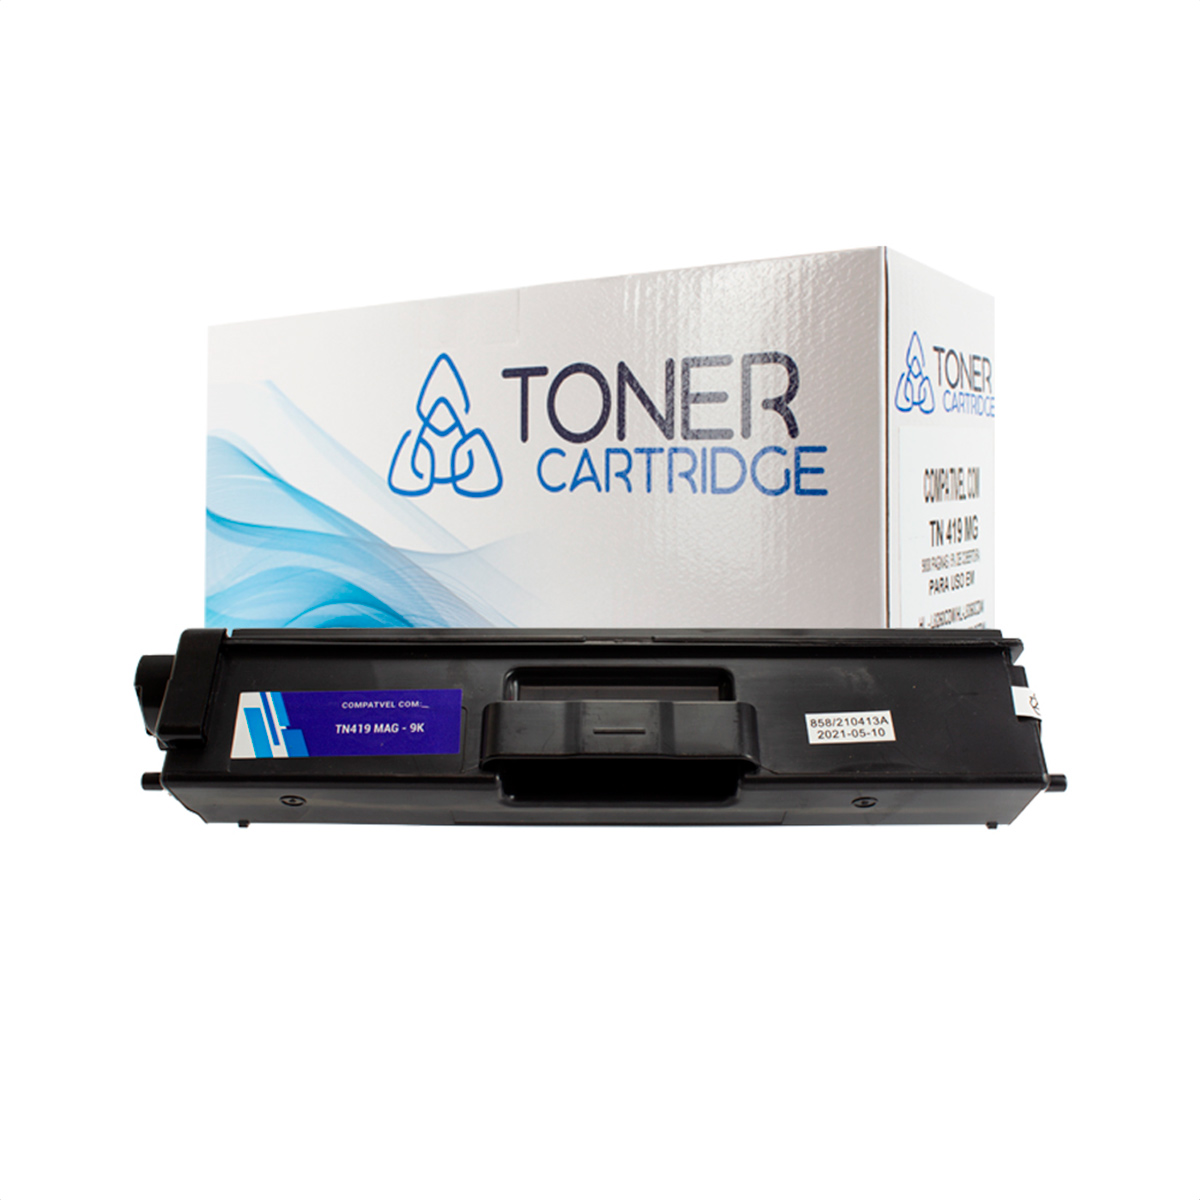 Toner TN413 Compatível Magenta HL-L8360CDW MFC-L8610CDW MFC-L8900CDW 4 mil páginas